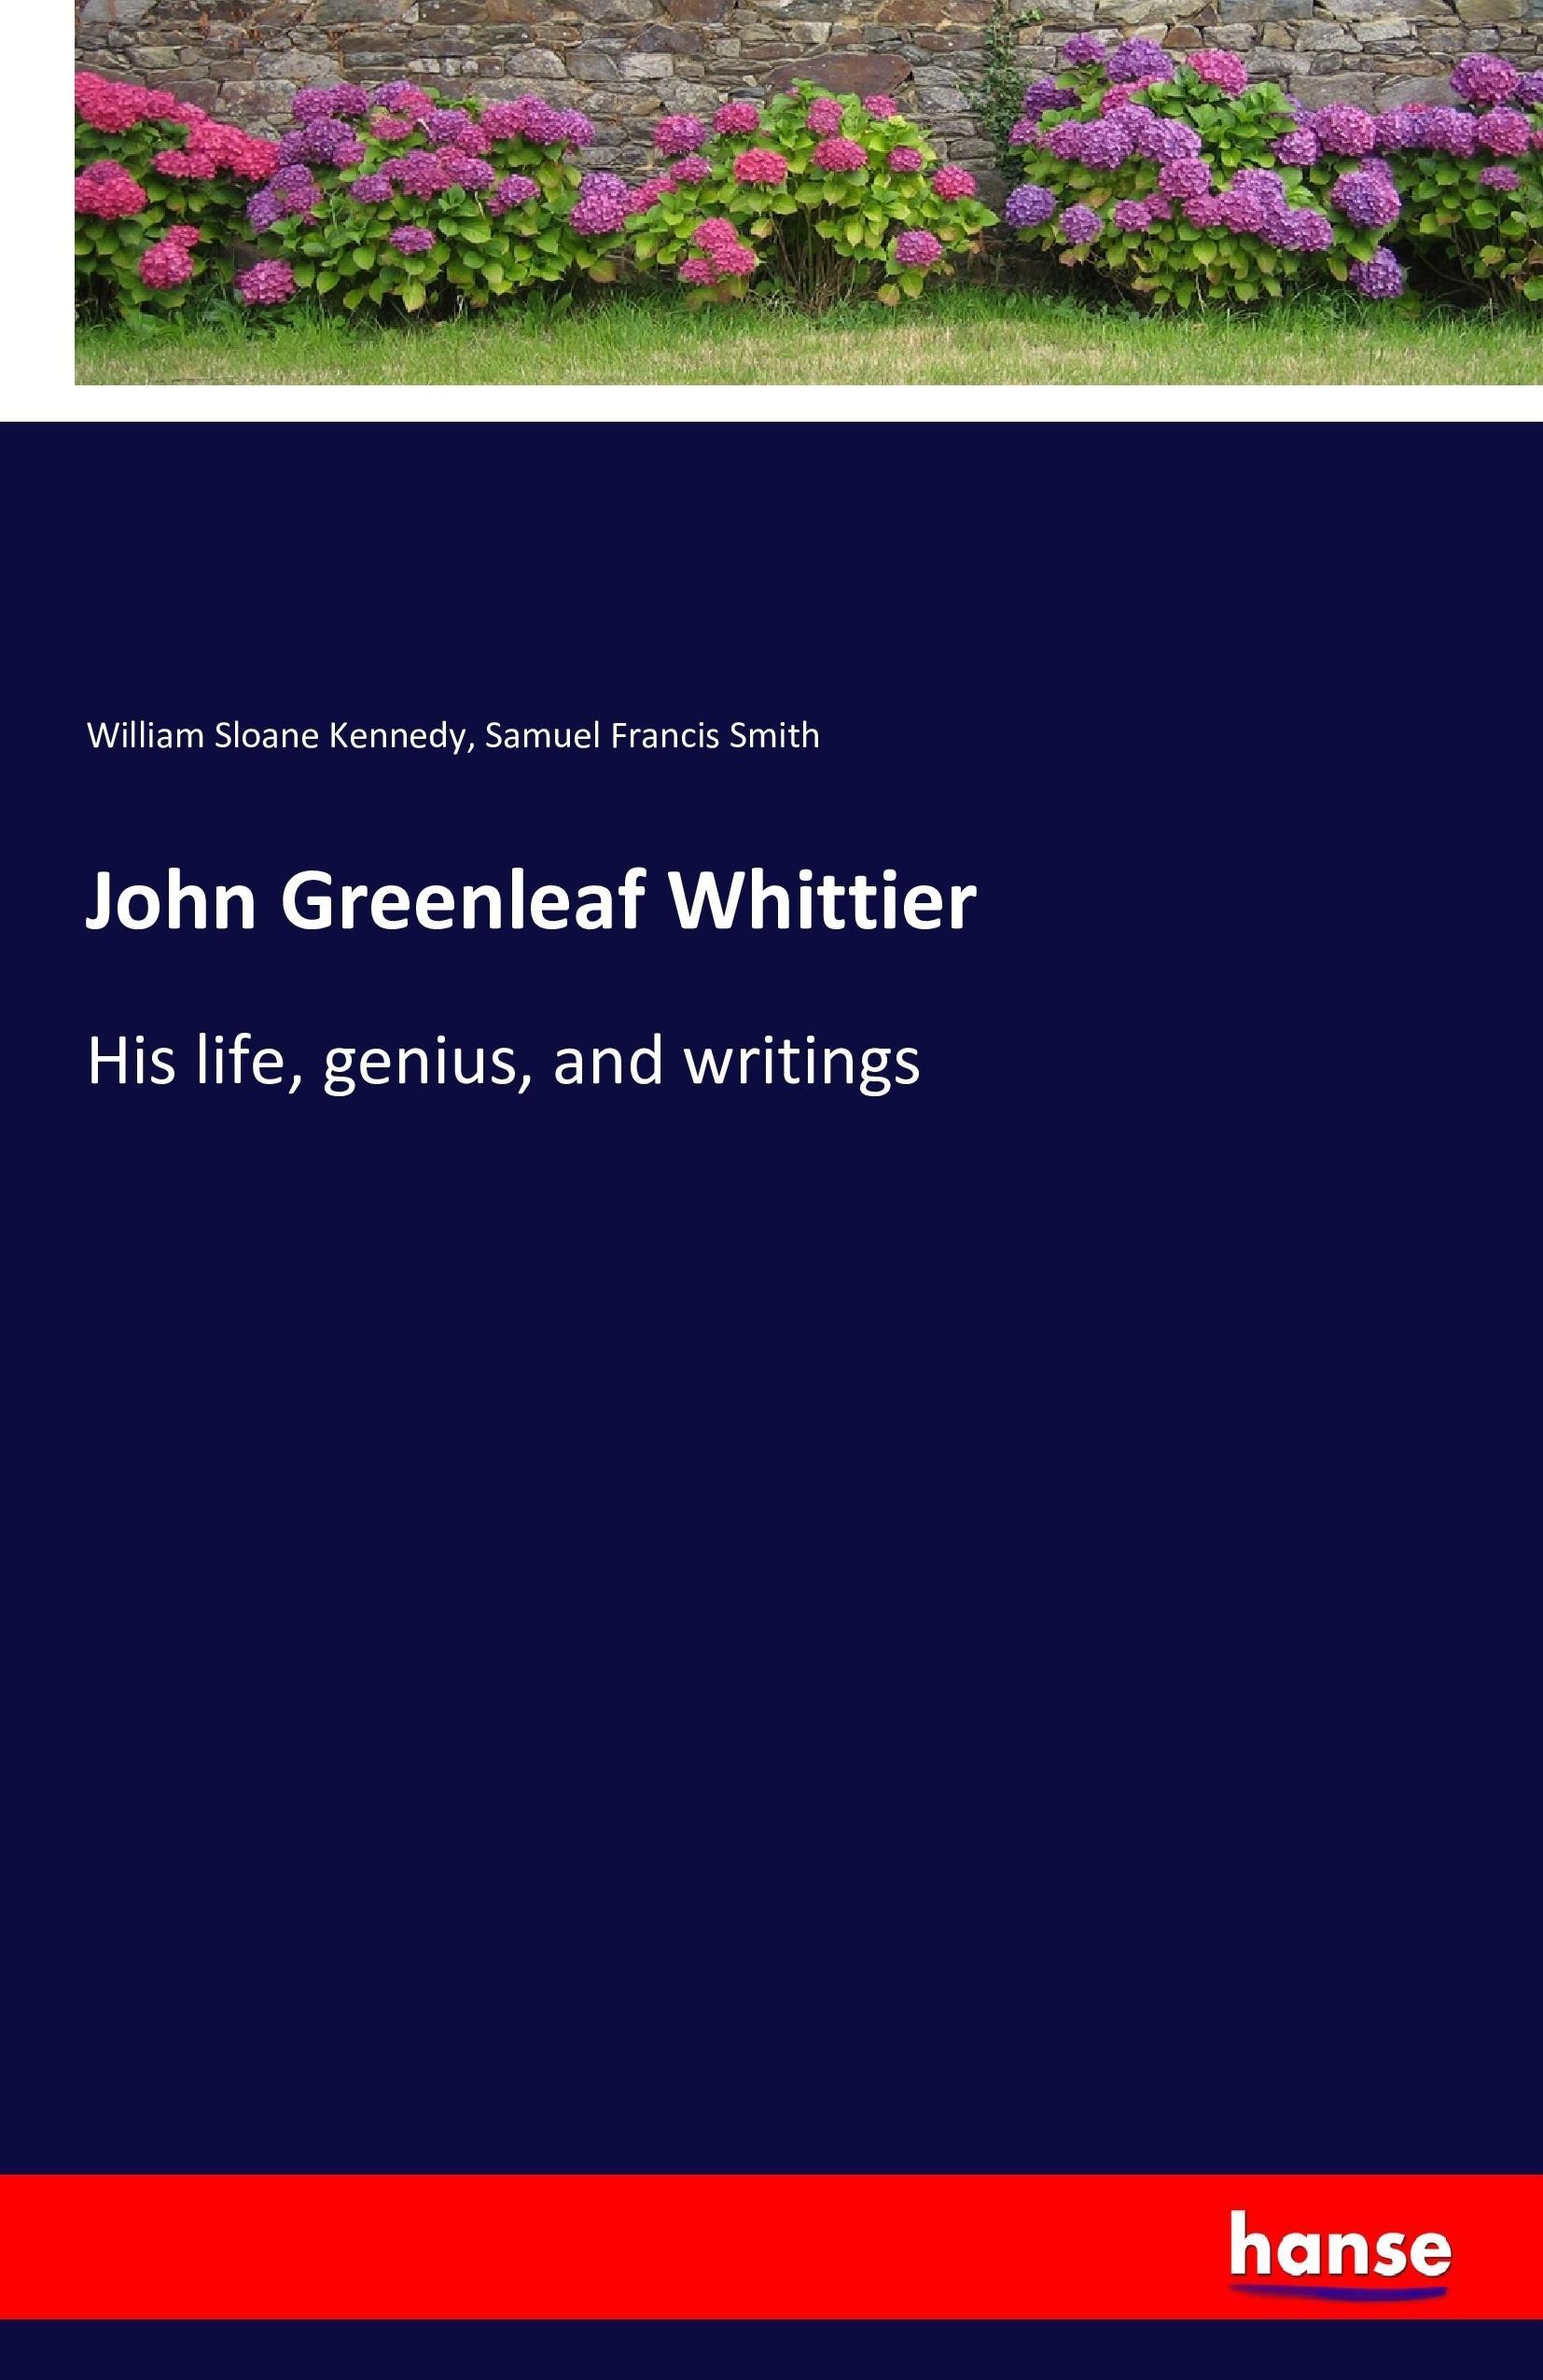 John Greenleaf Whittier / His life, genius, and writings / William Sloane Kennedy (u. a.) / Taschenbuch / Paperback / 376 S. / Englisch / 2016 / hansebooks / EAN 9783743324336 - Kennedy, William Sloane